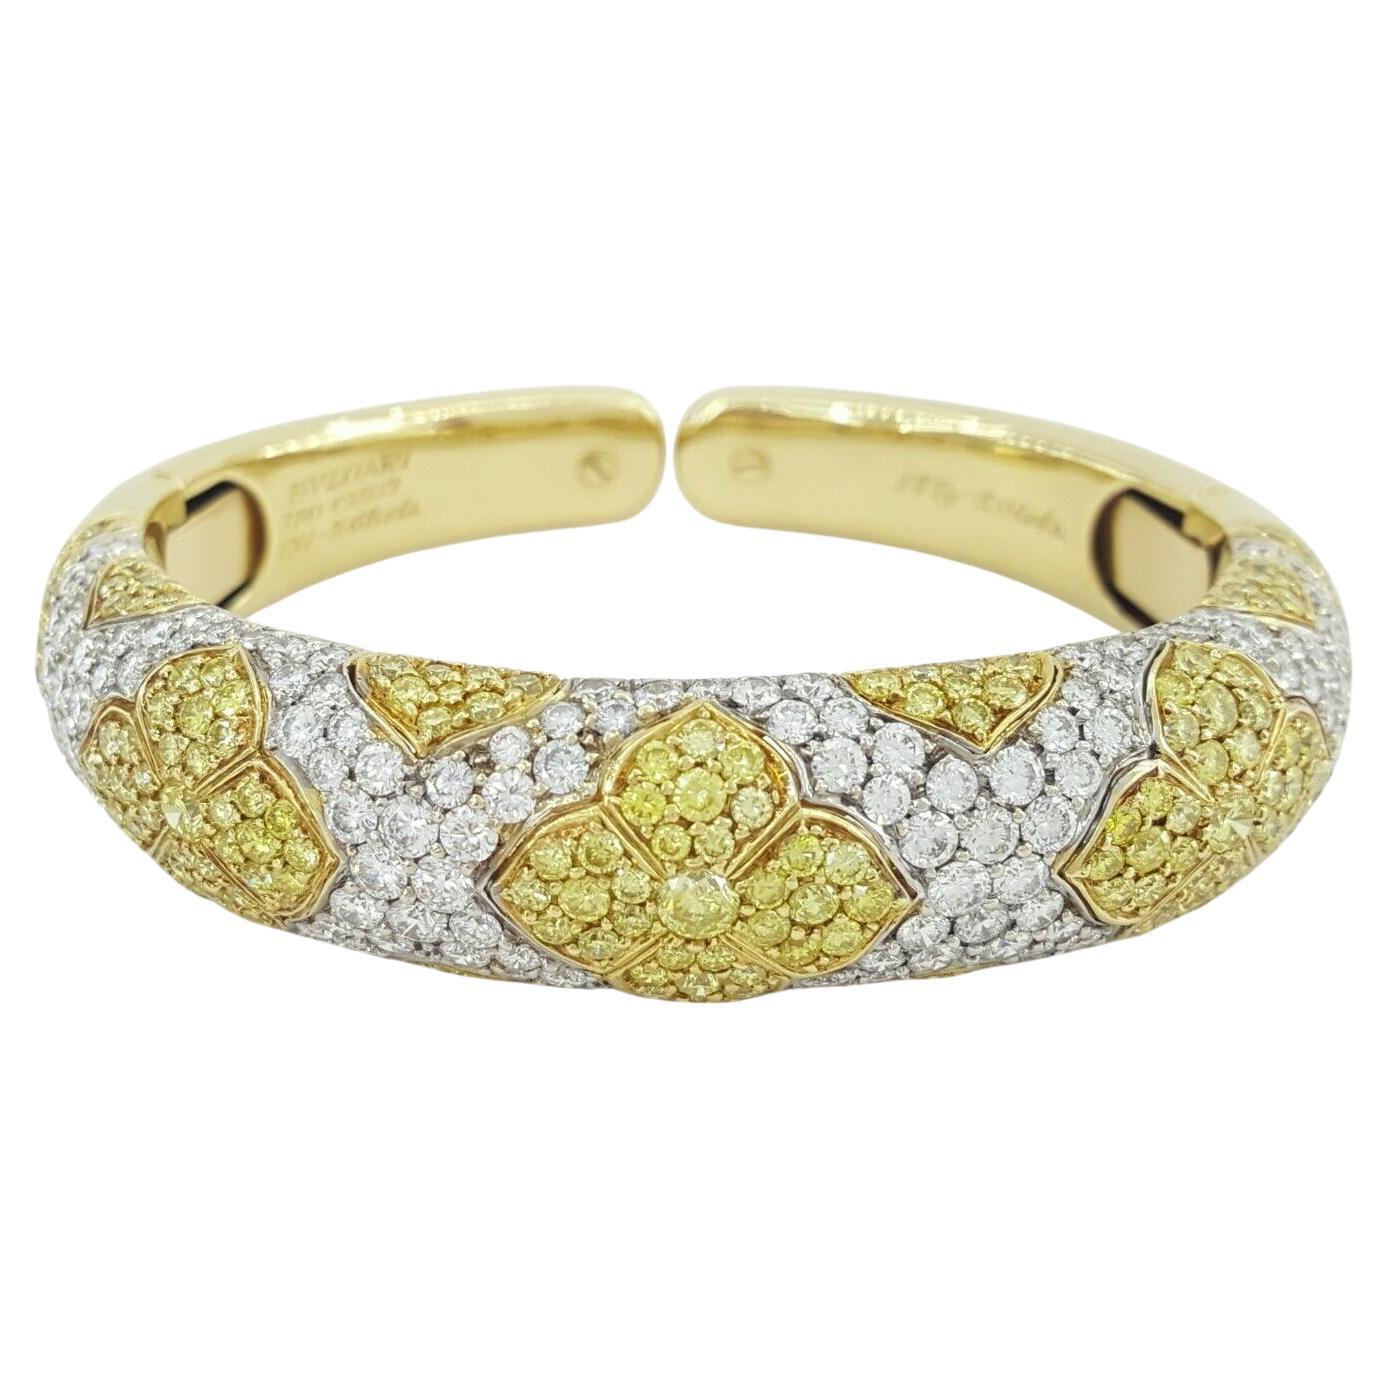 An authentic bangle bracelet design by Bulgari Roma.
5 carats of fancy yellow diamonds
5 carats of white diamonds
